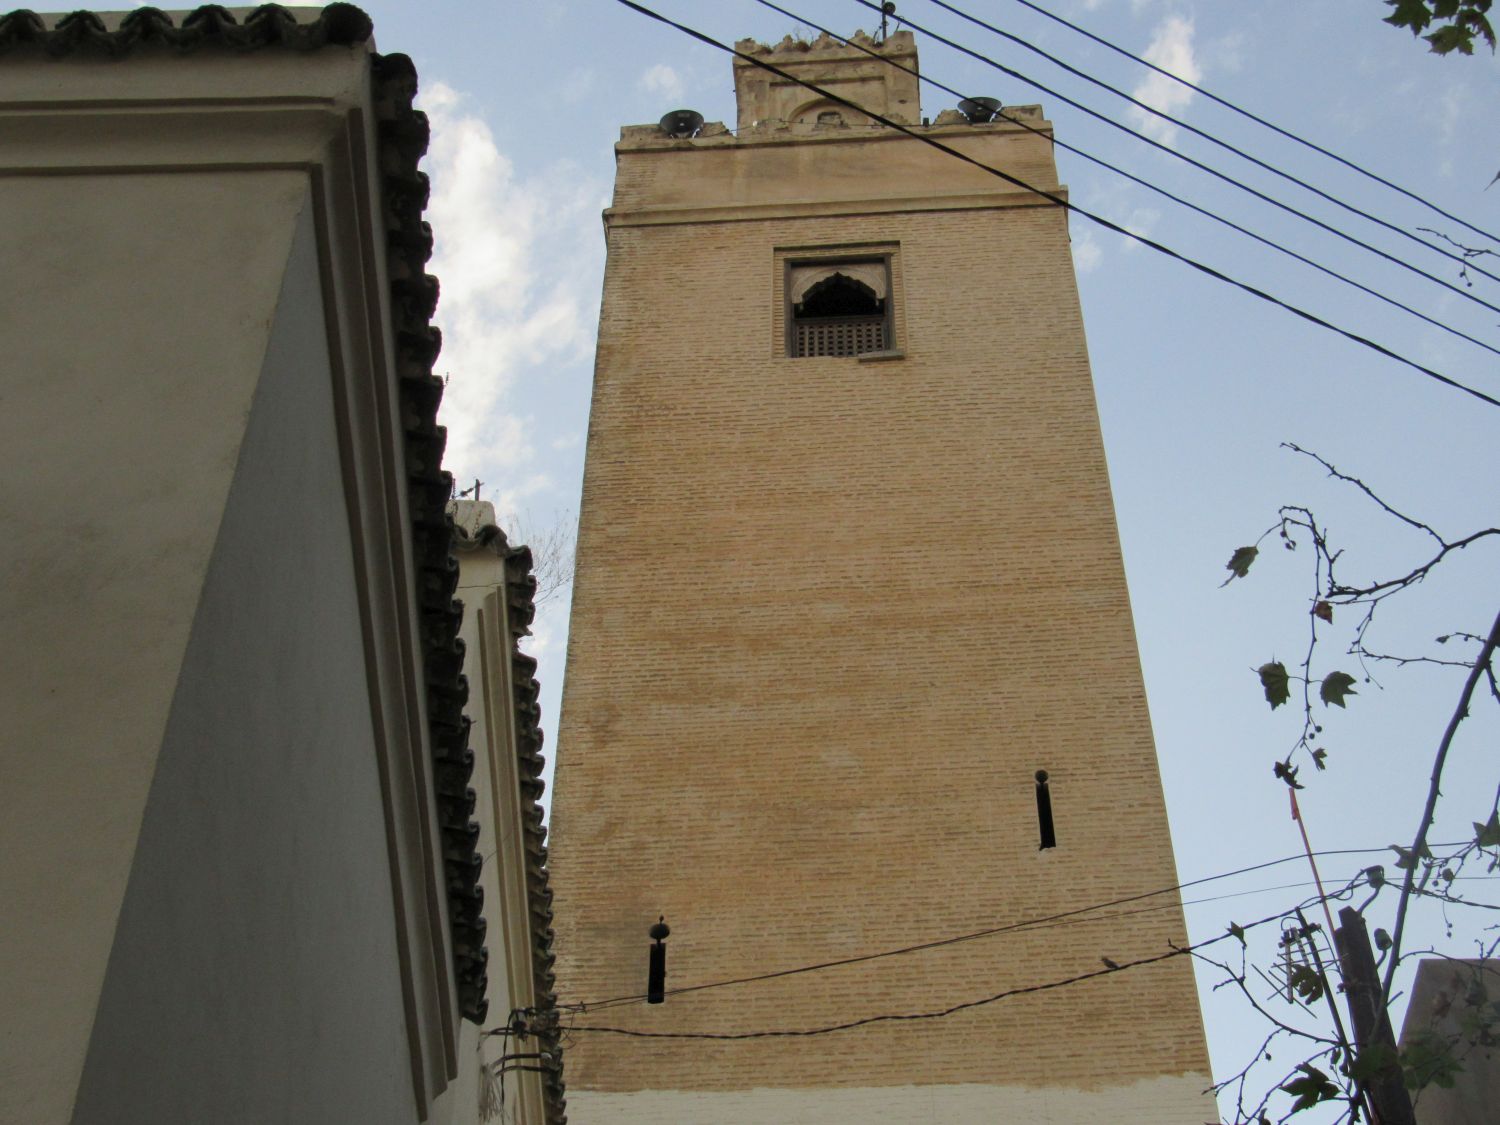 Bab Guissa Mosque and Madrasa - Exterior, upward view of the minaret